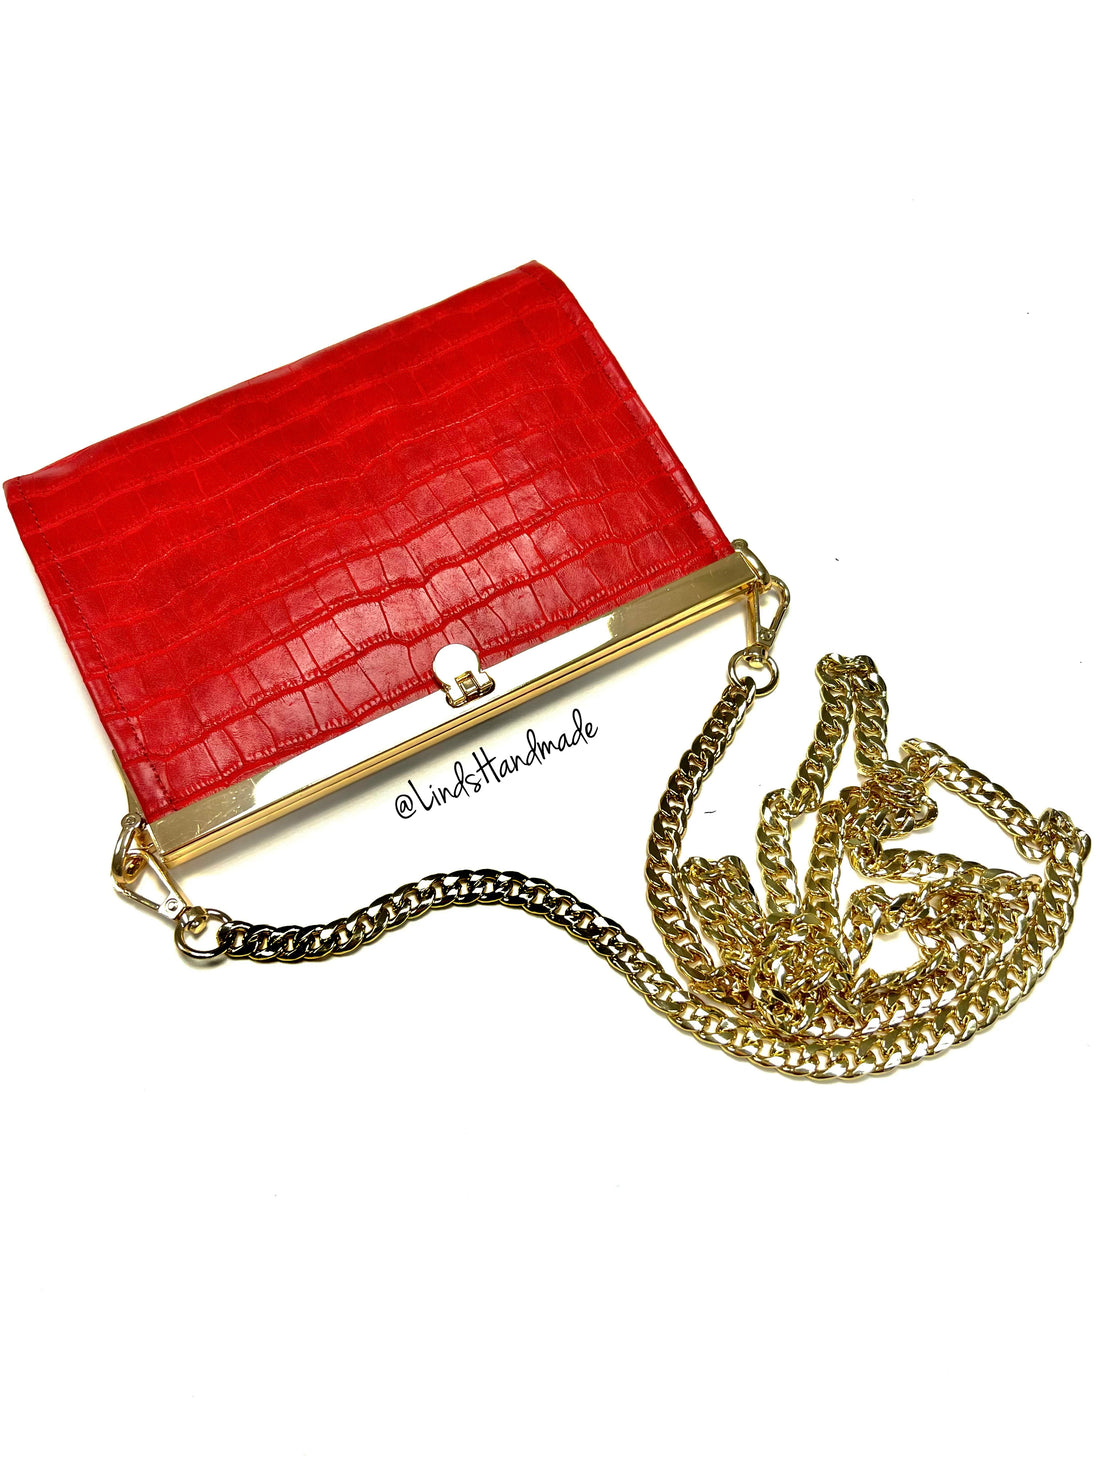 Crimson red faux croc leather Ashley clutch